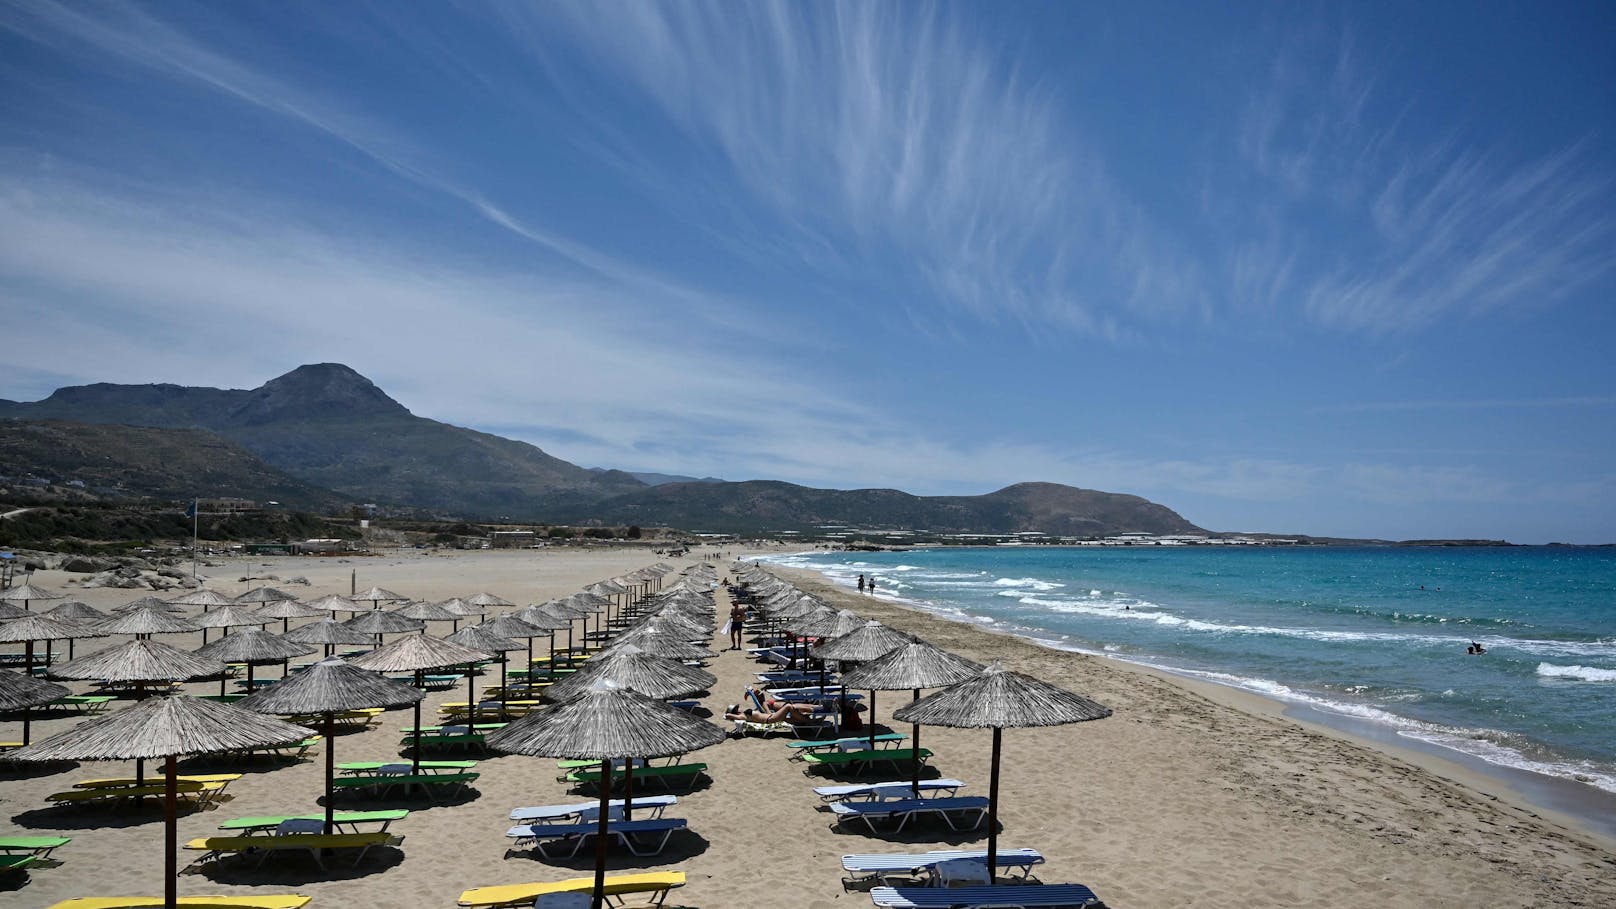 Erdbeben erschüttert Kreta, reißt Tausende aus Schlaf